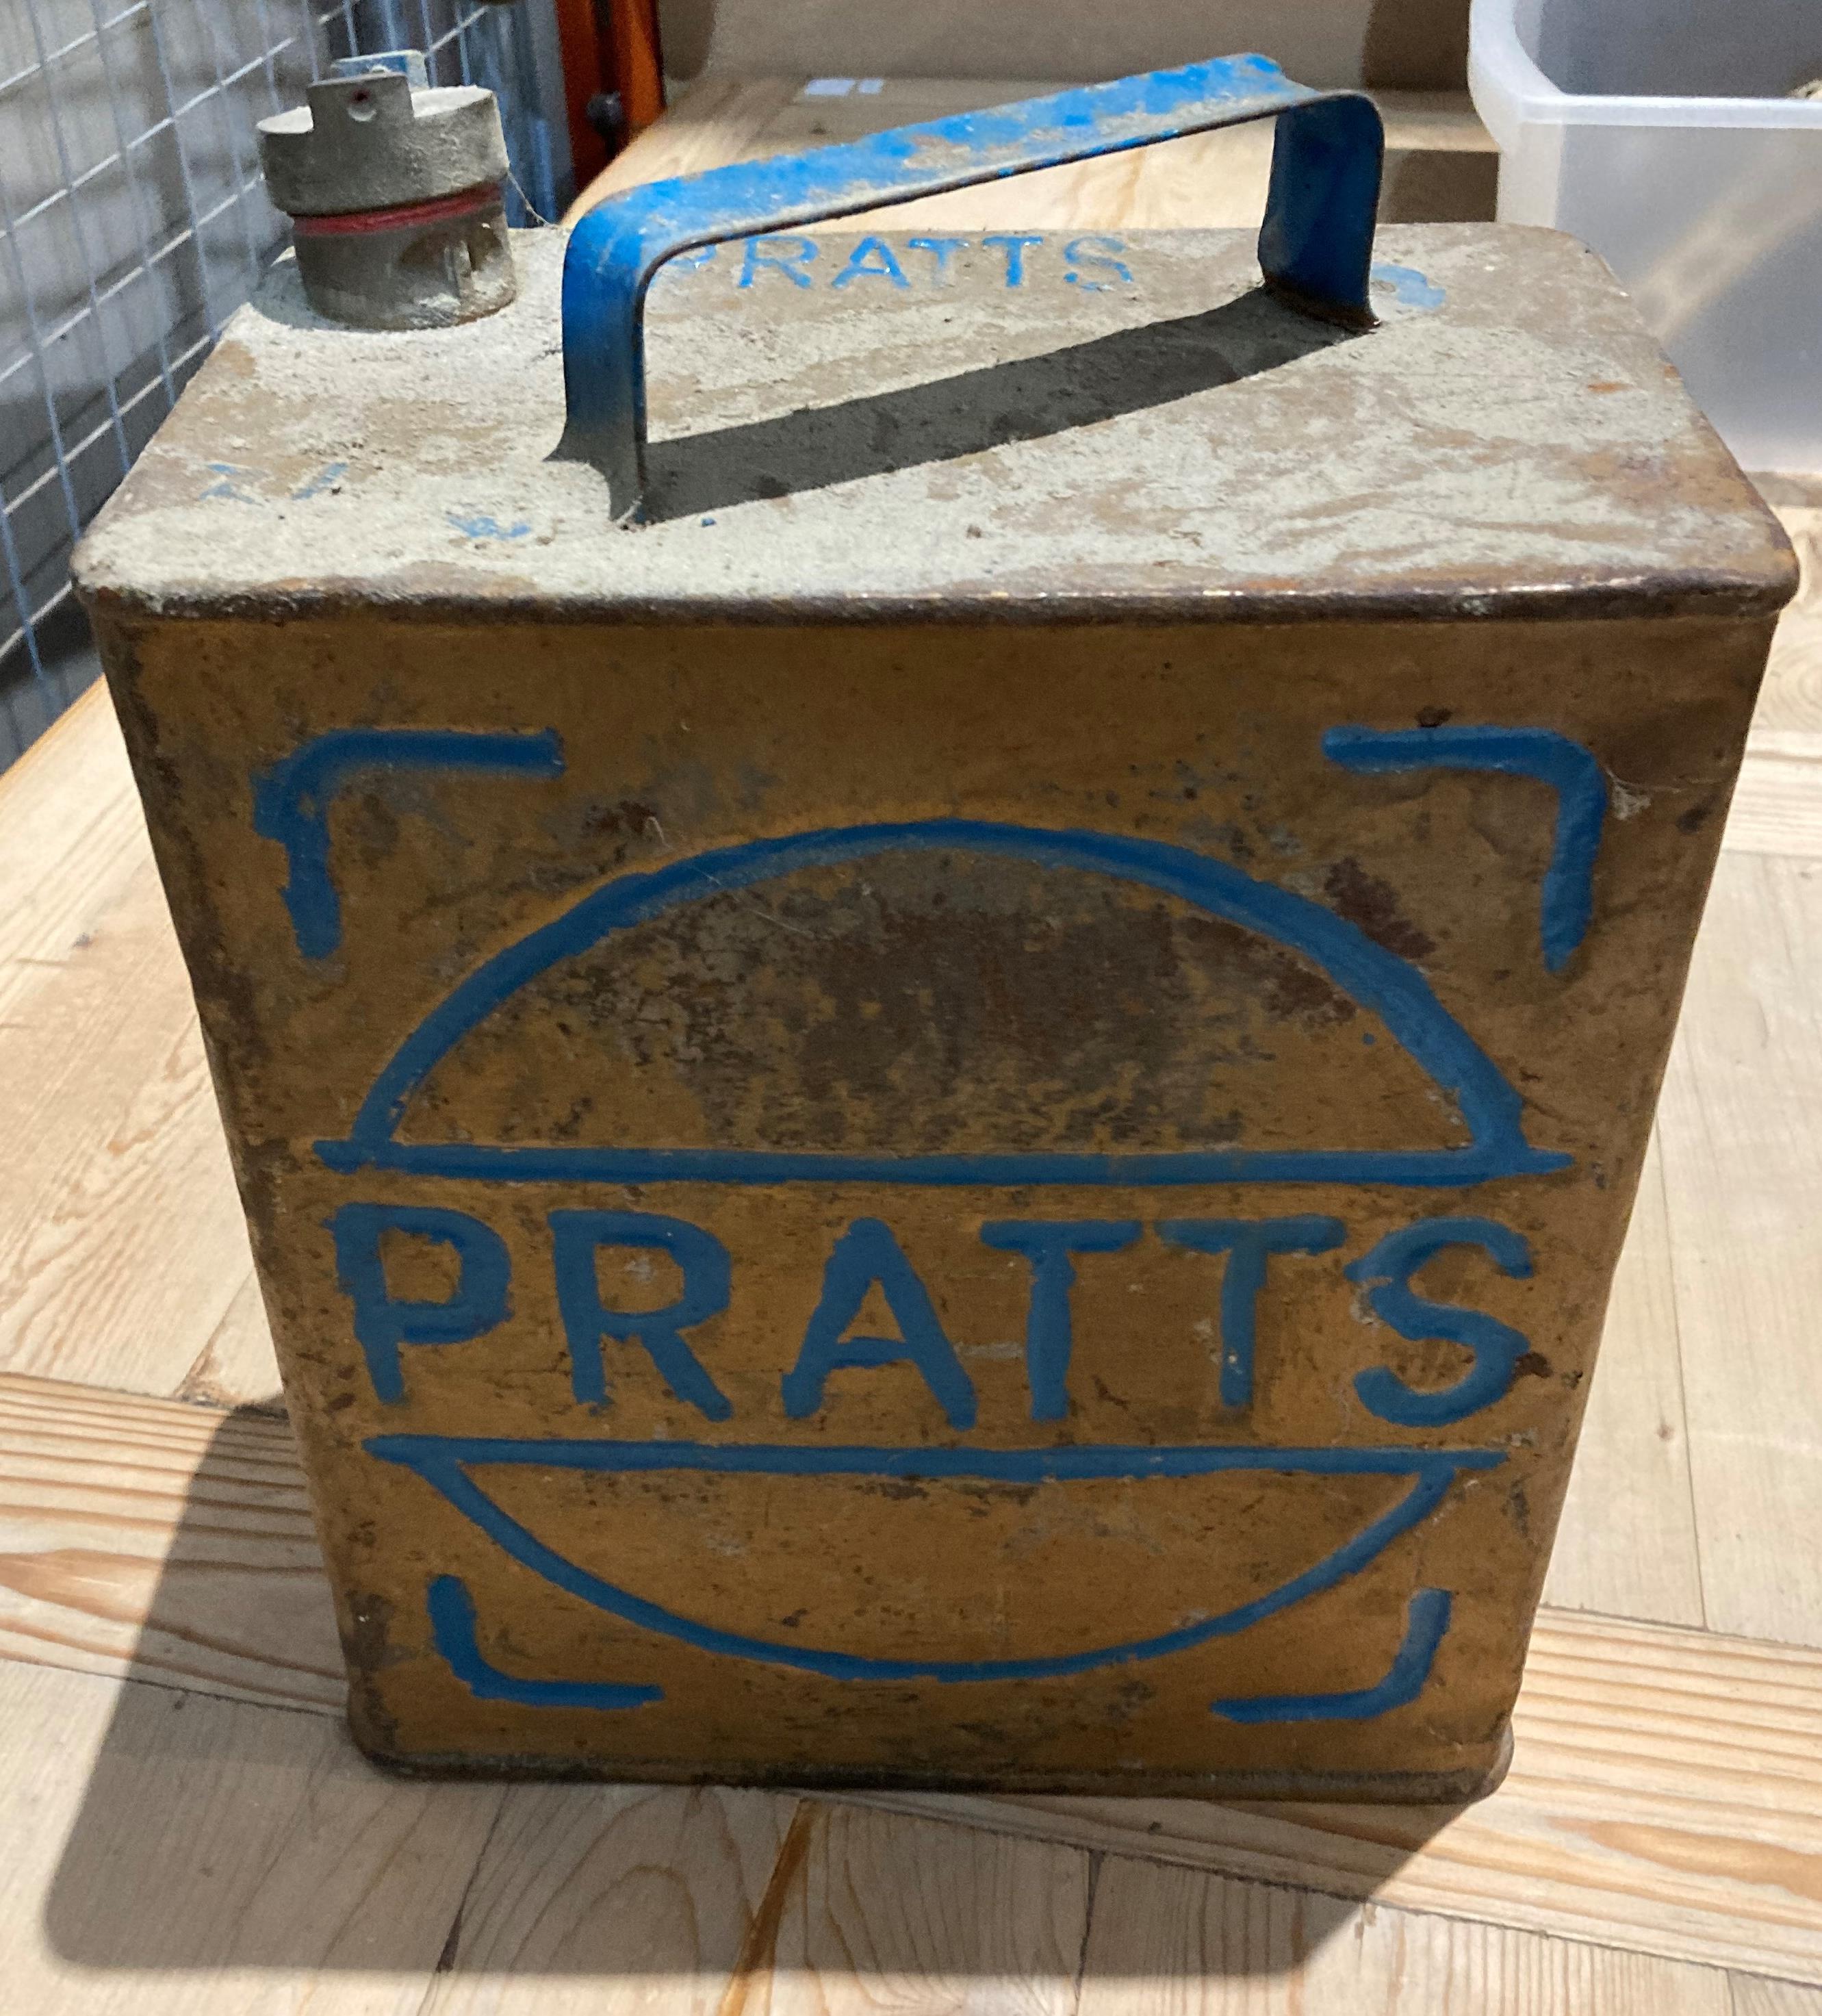 A Pratts vintage metal fuel can (no contents) (saleroom location: MA1)